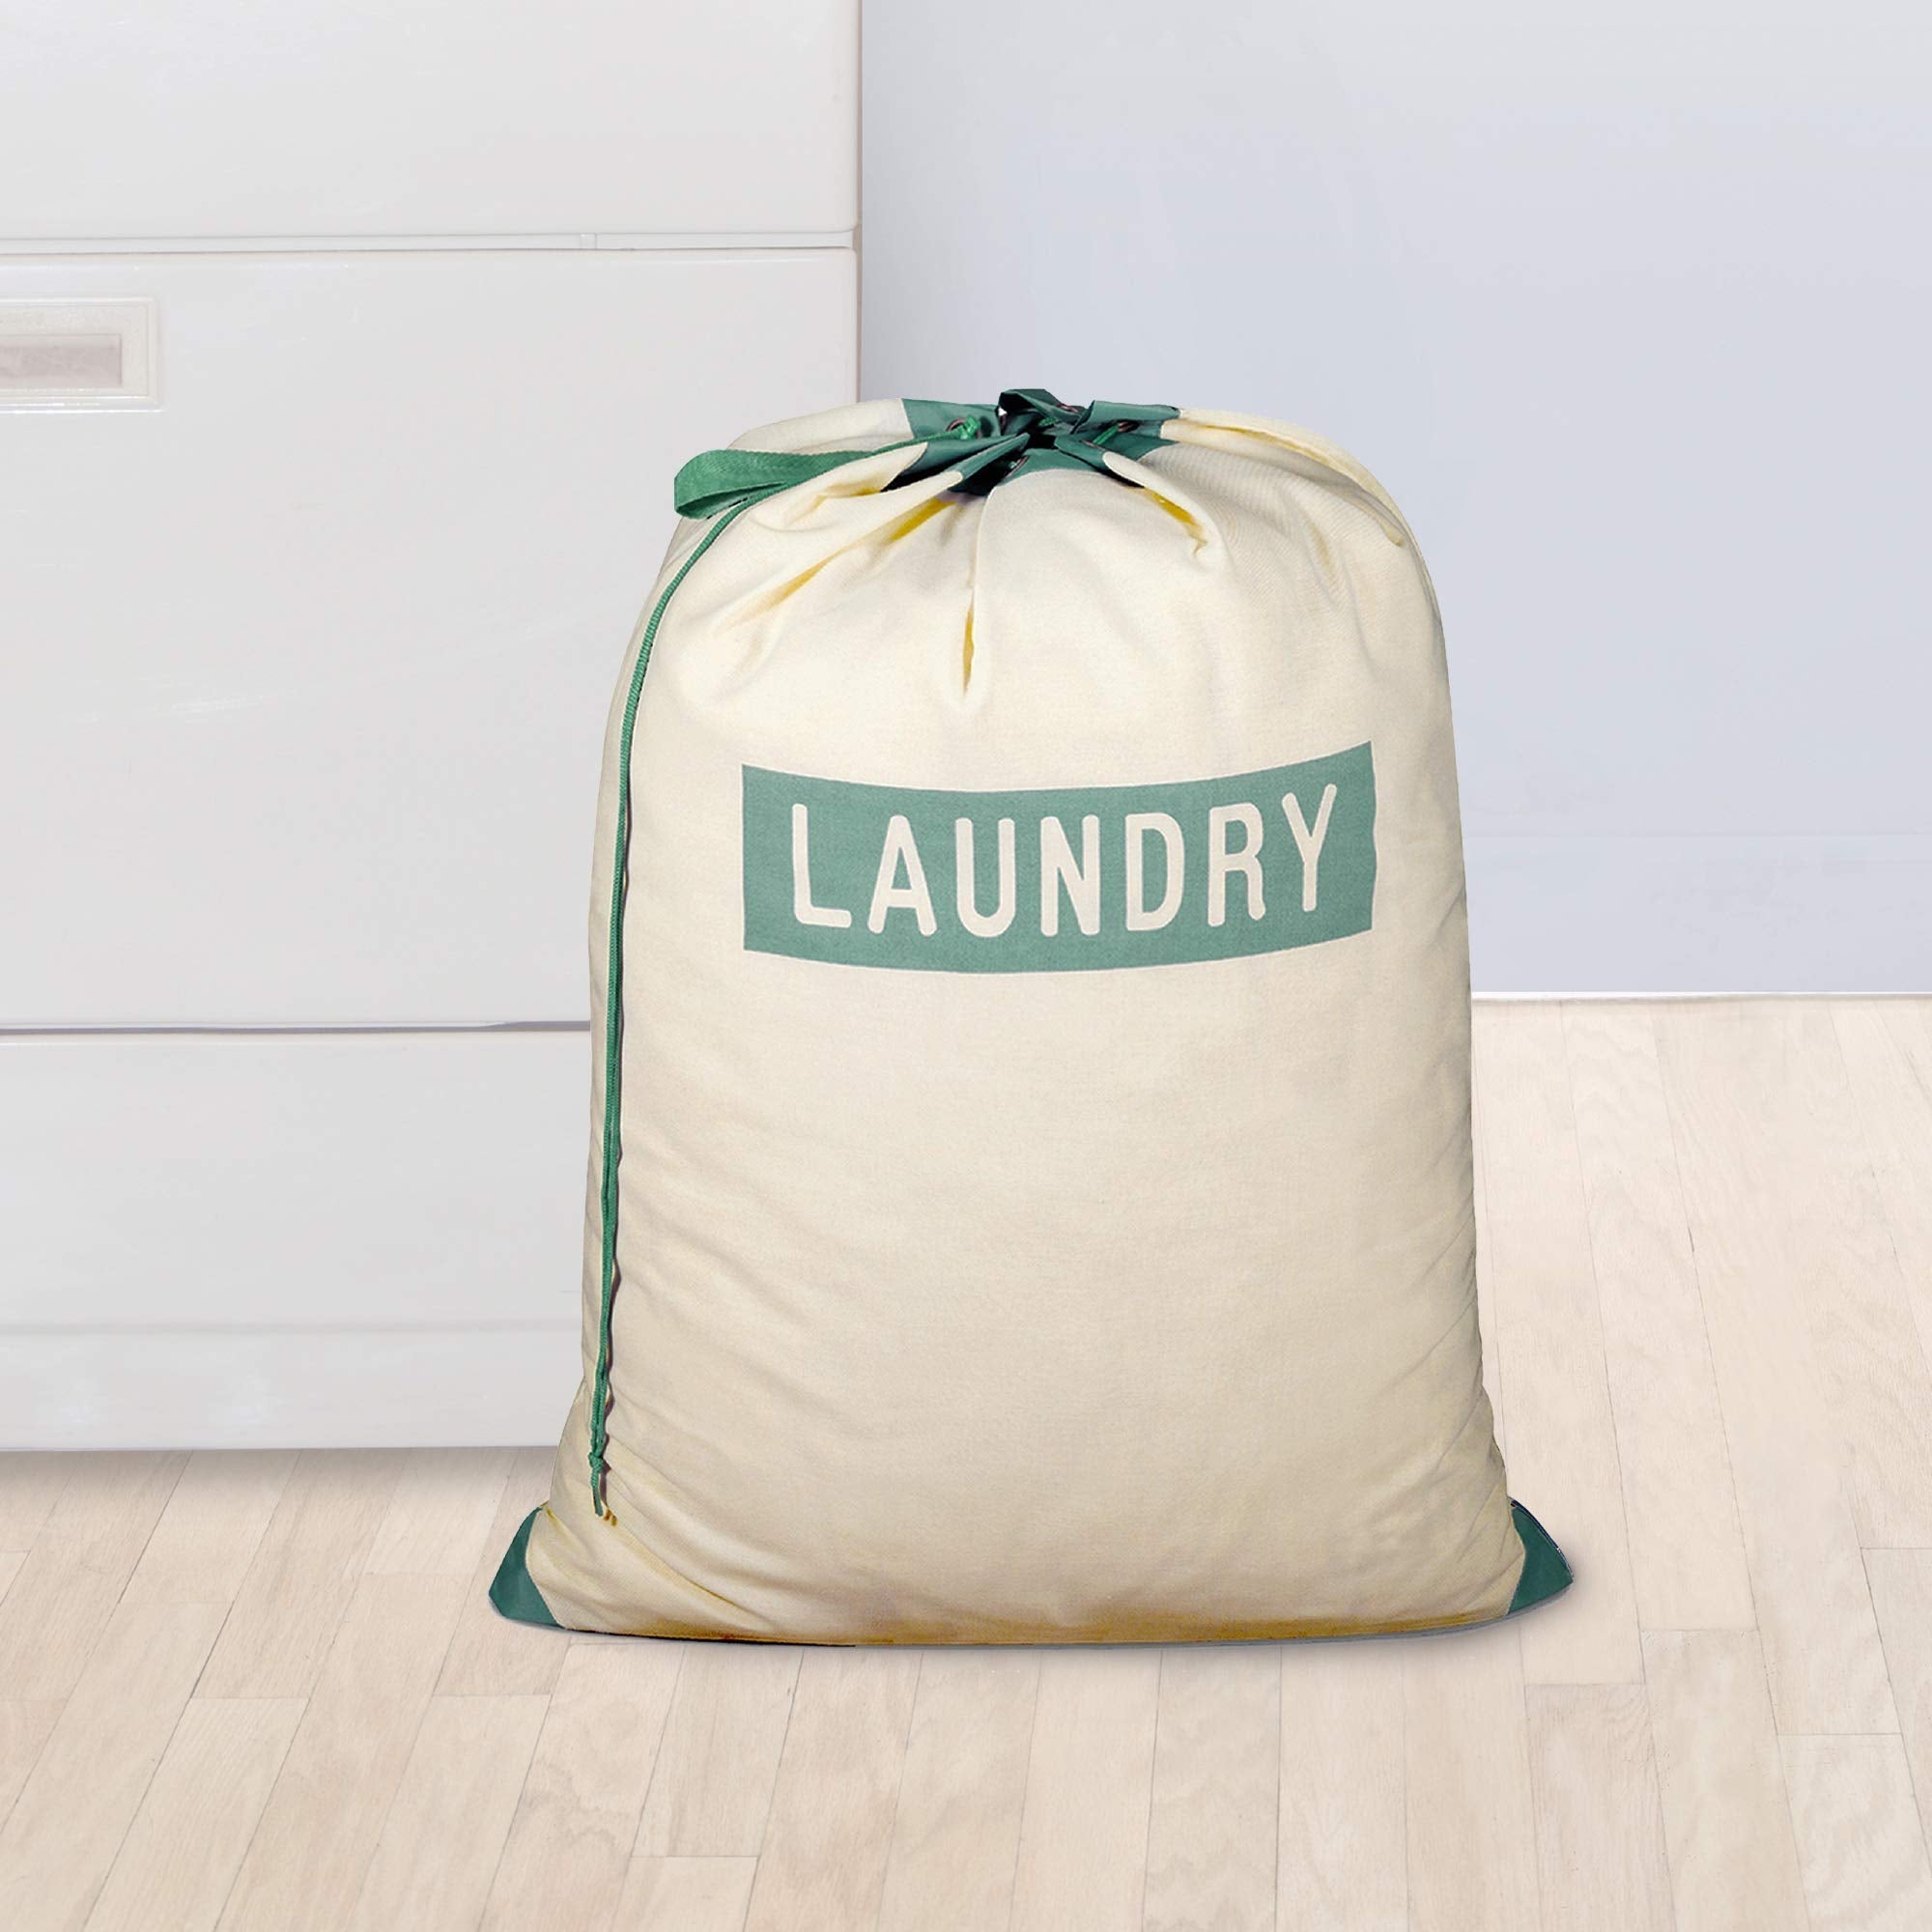  Small Laundry Bag, Drawstring, Carry Strap, Lock